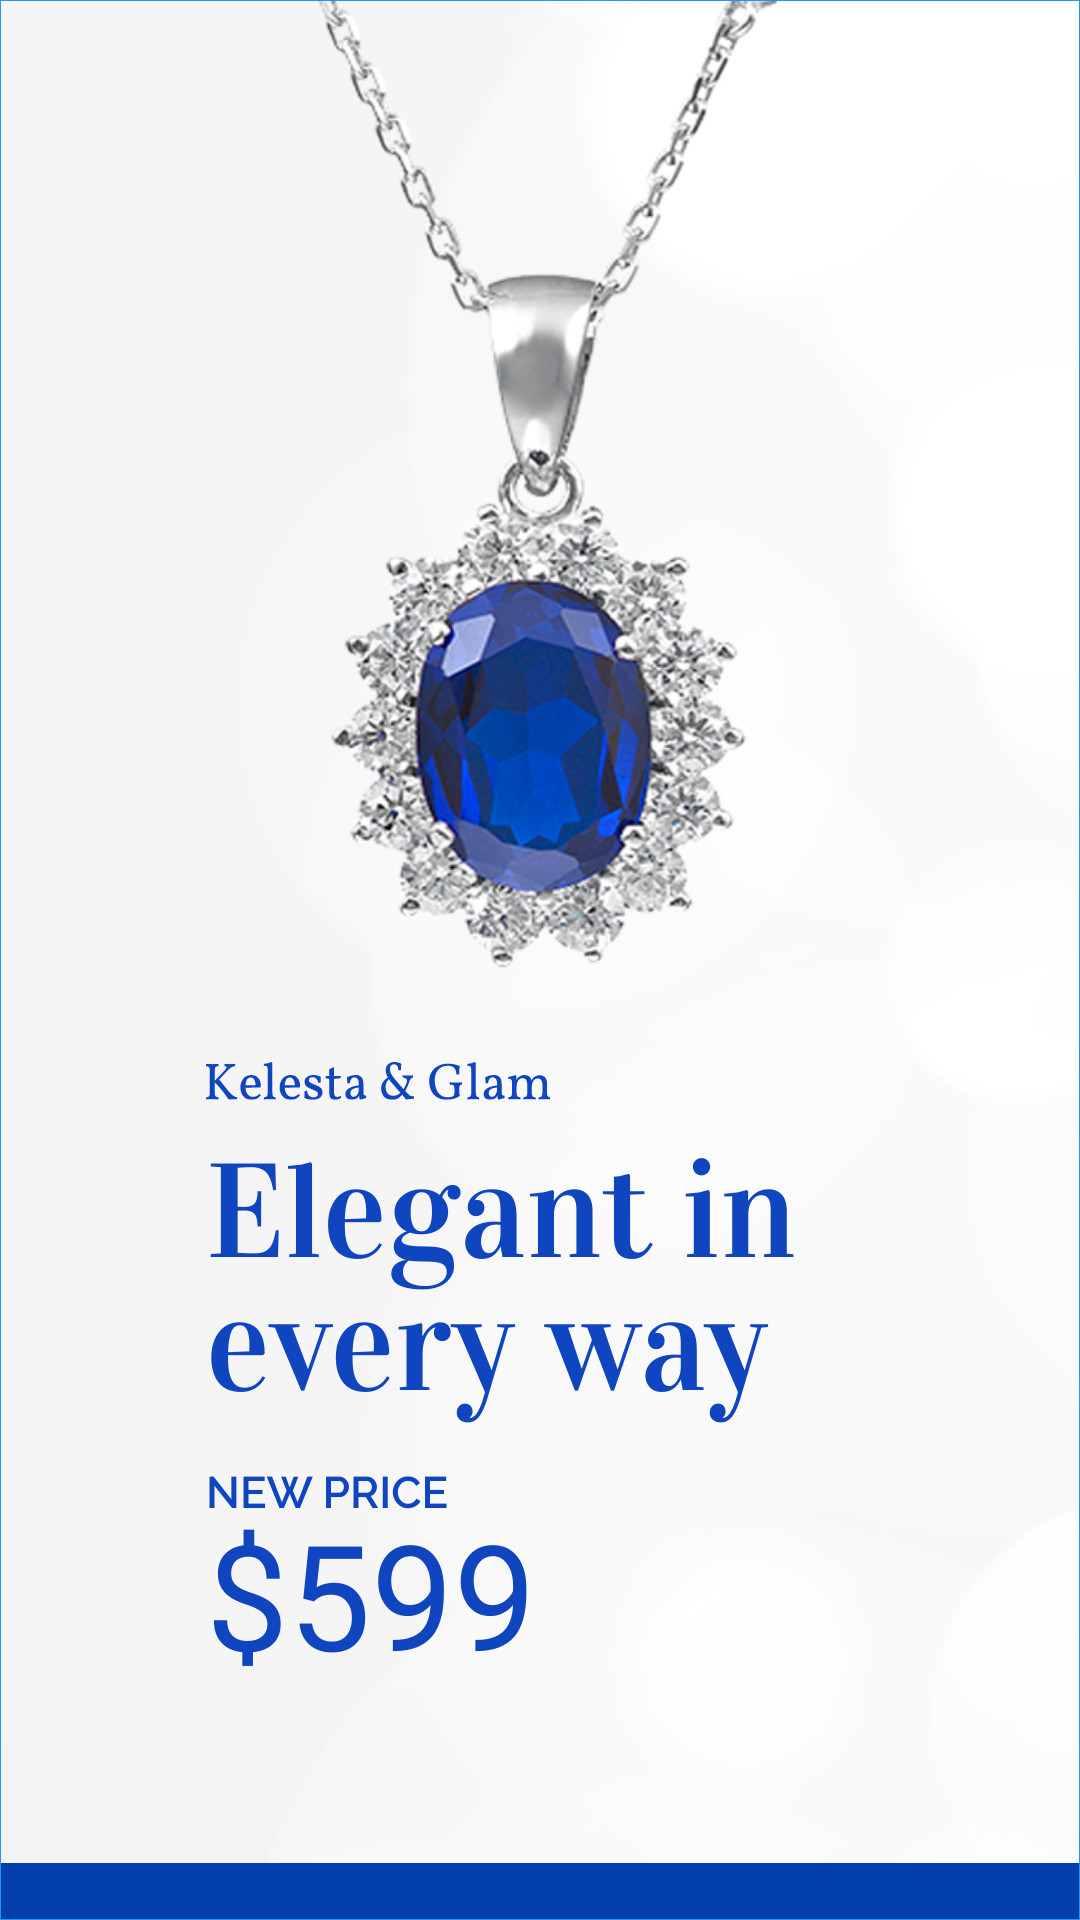 Elegant Sapphire Necklace